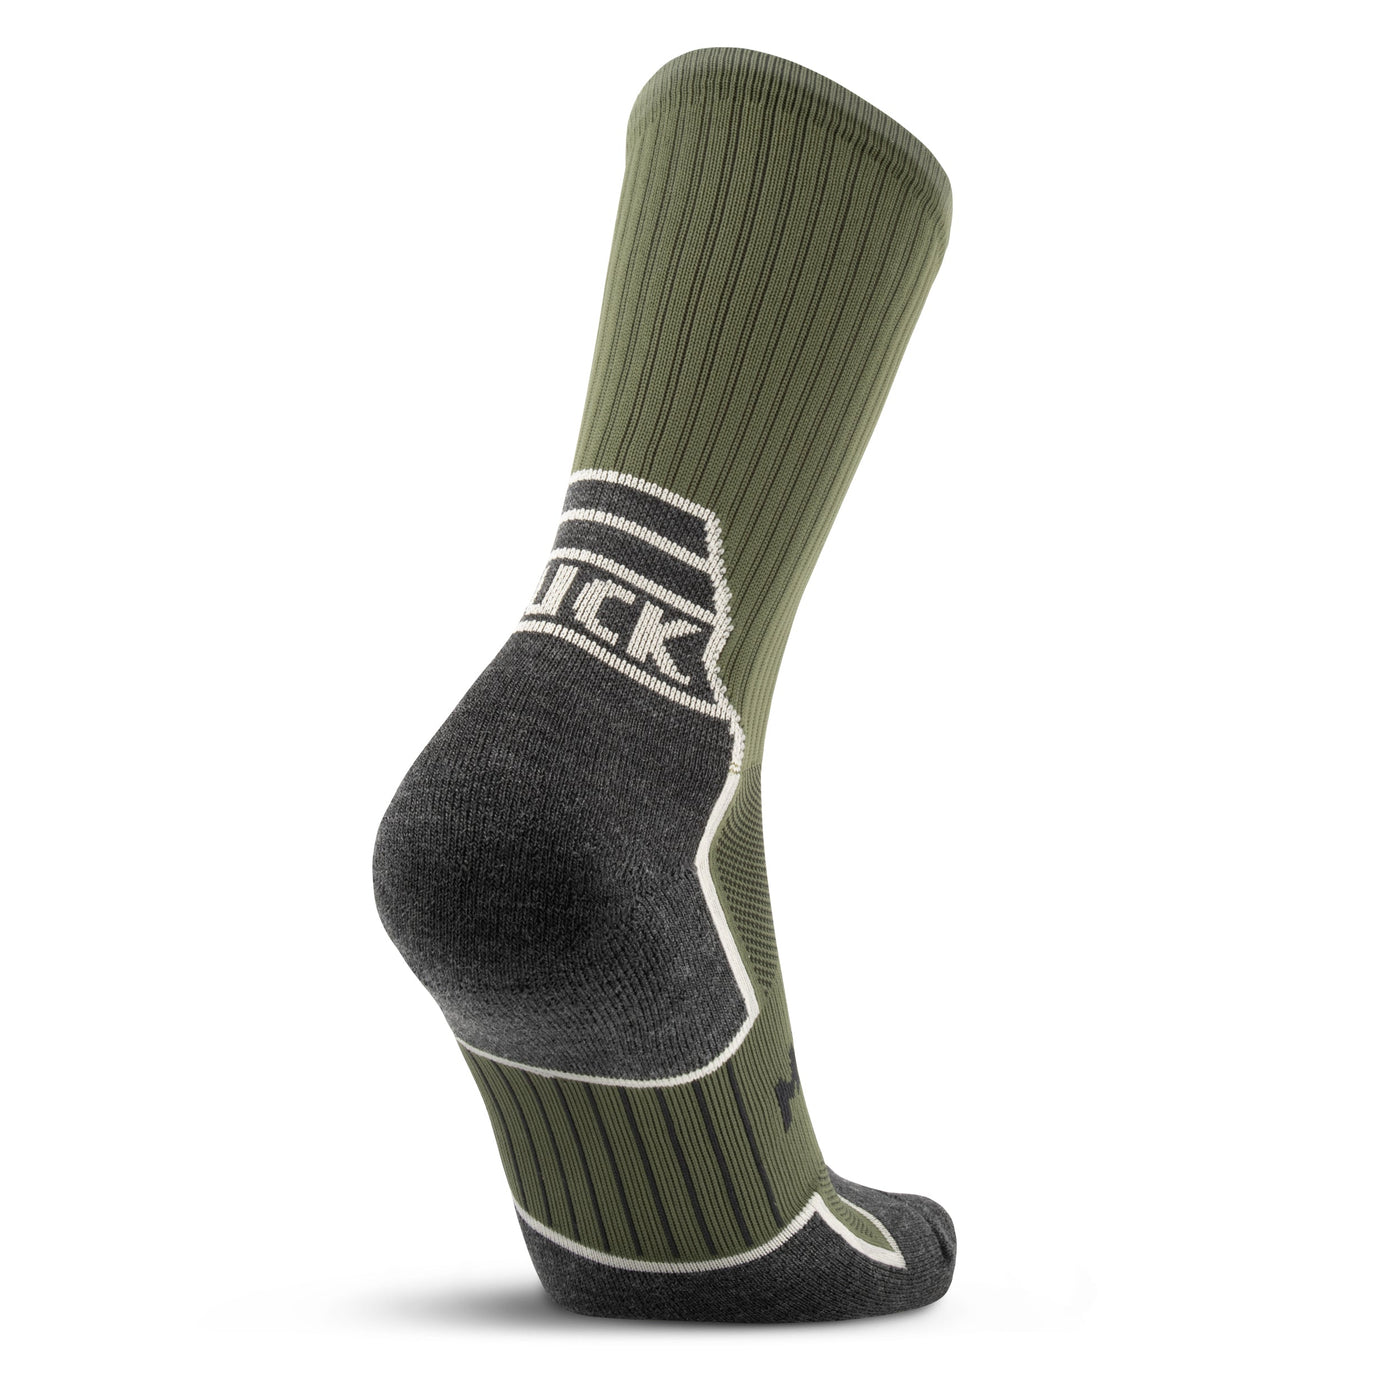 MudGear Ruck Sock (Army Green)